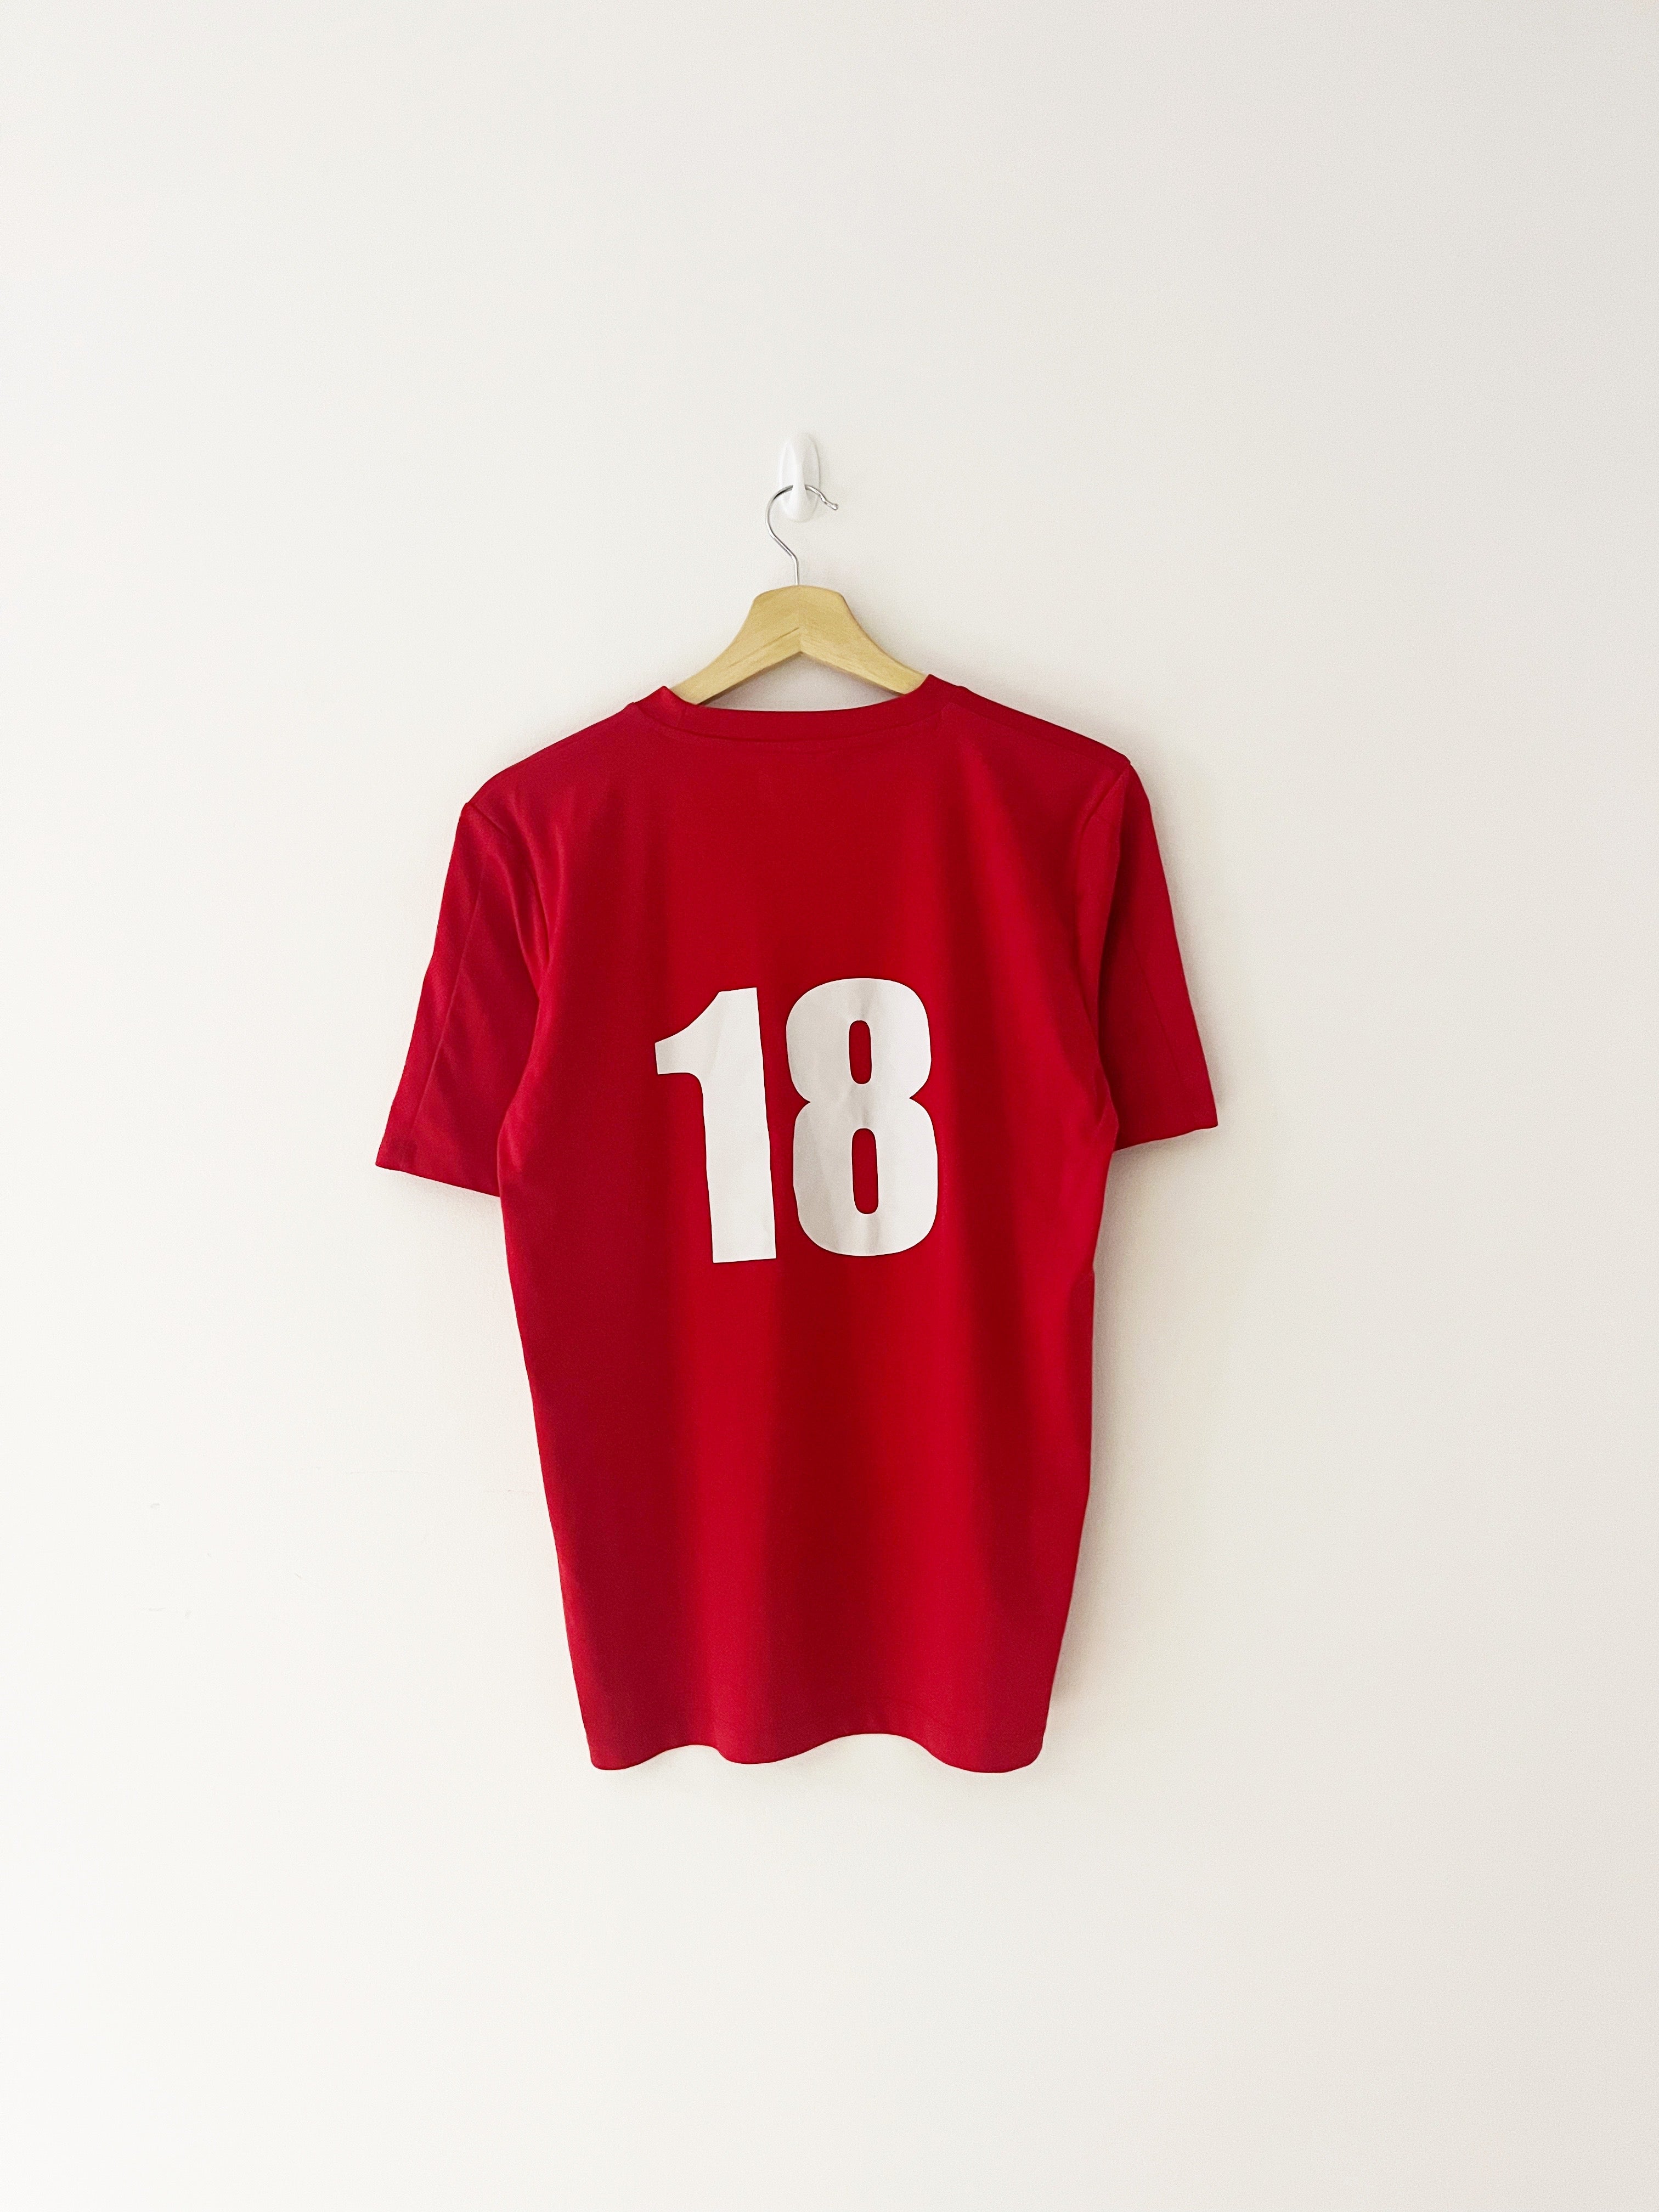 2019/20 Llanelli Home Shirt #18  (M) 9/10